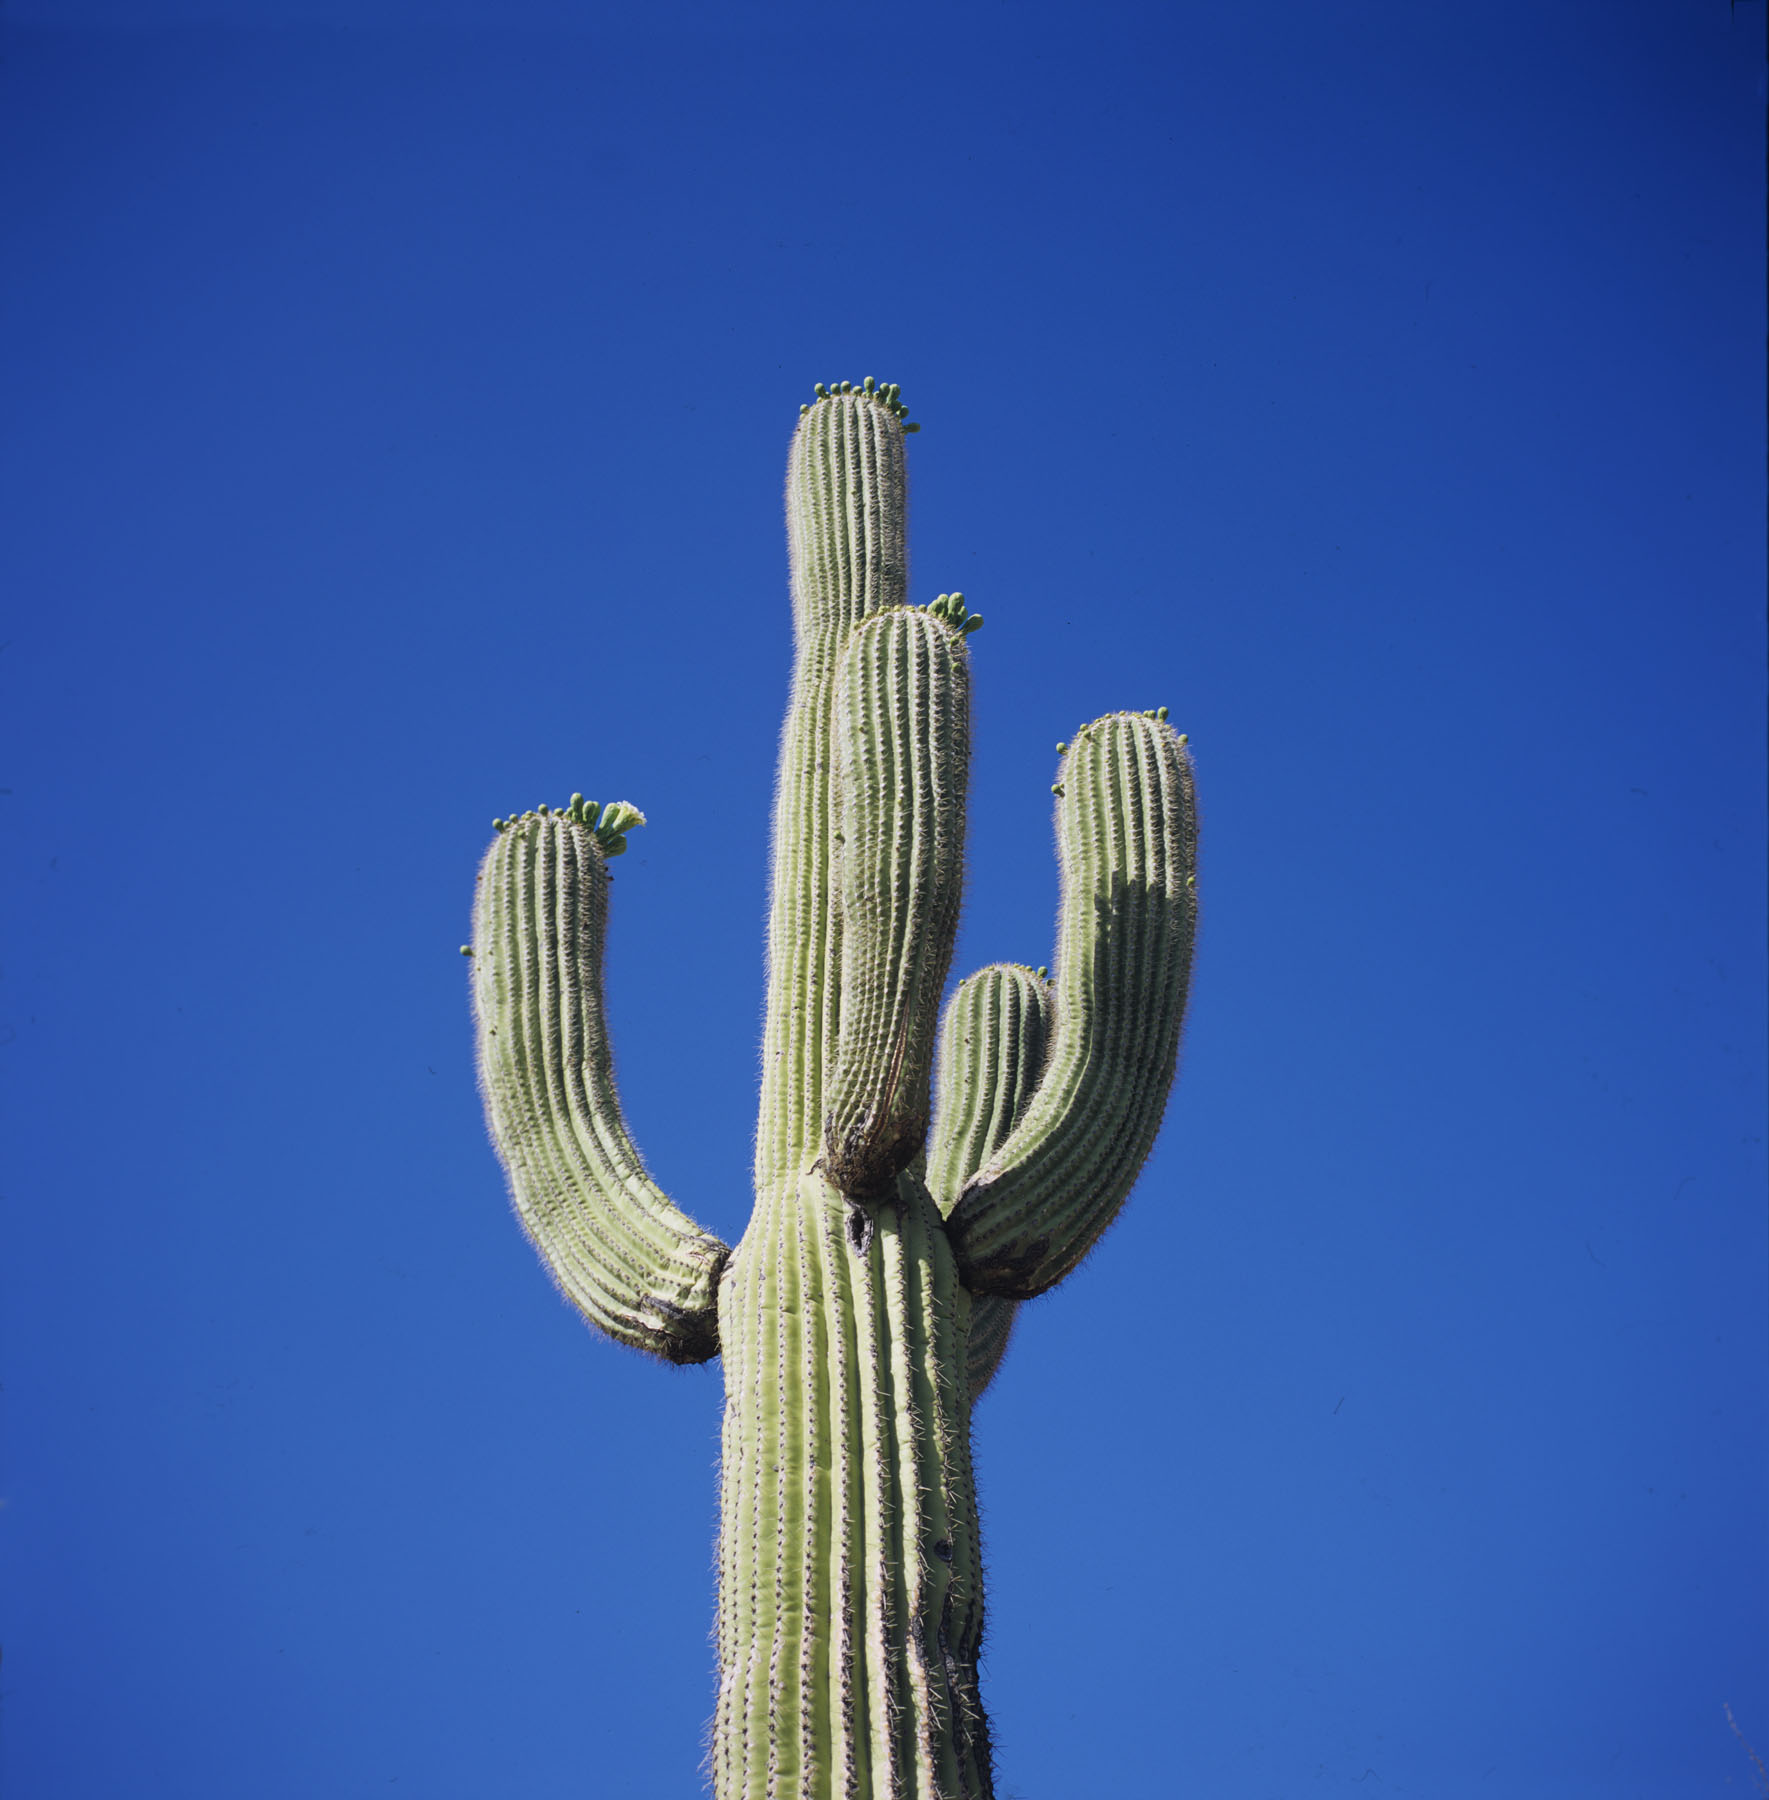 Photo de cactus. Par Peter Barwick, CC BY-NC-ND 2.0 / https://tinyurl.com/2p8n8ab9